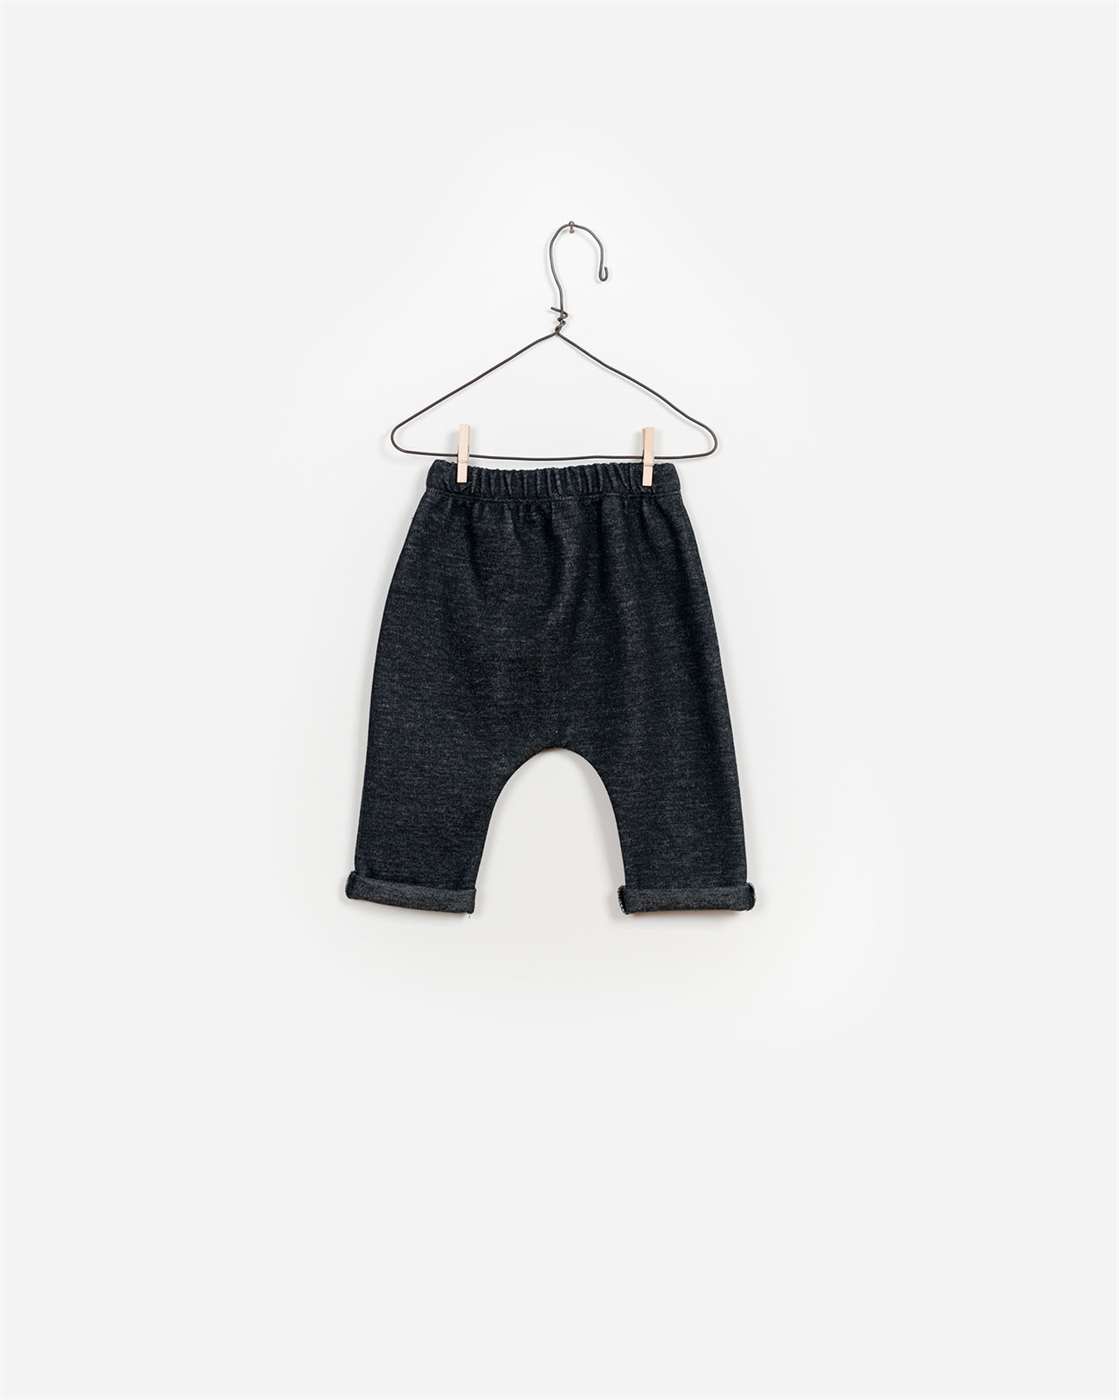 BeeBoo|BeeBoo PlayUp vêtement bébé baby cloth Pantalon double face pants noir black 1